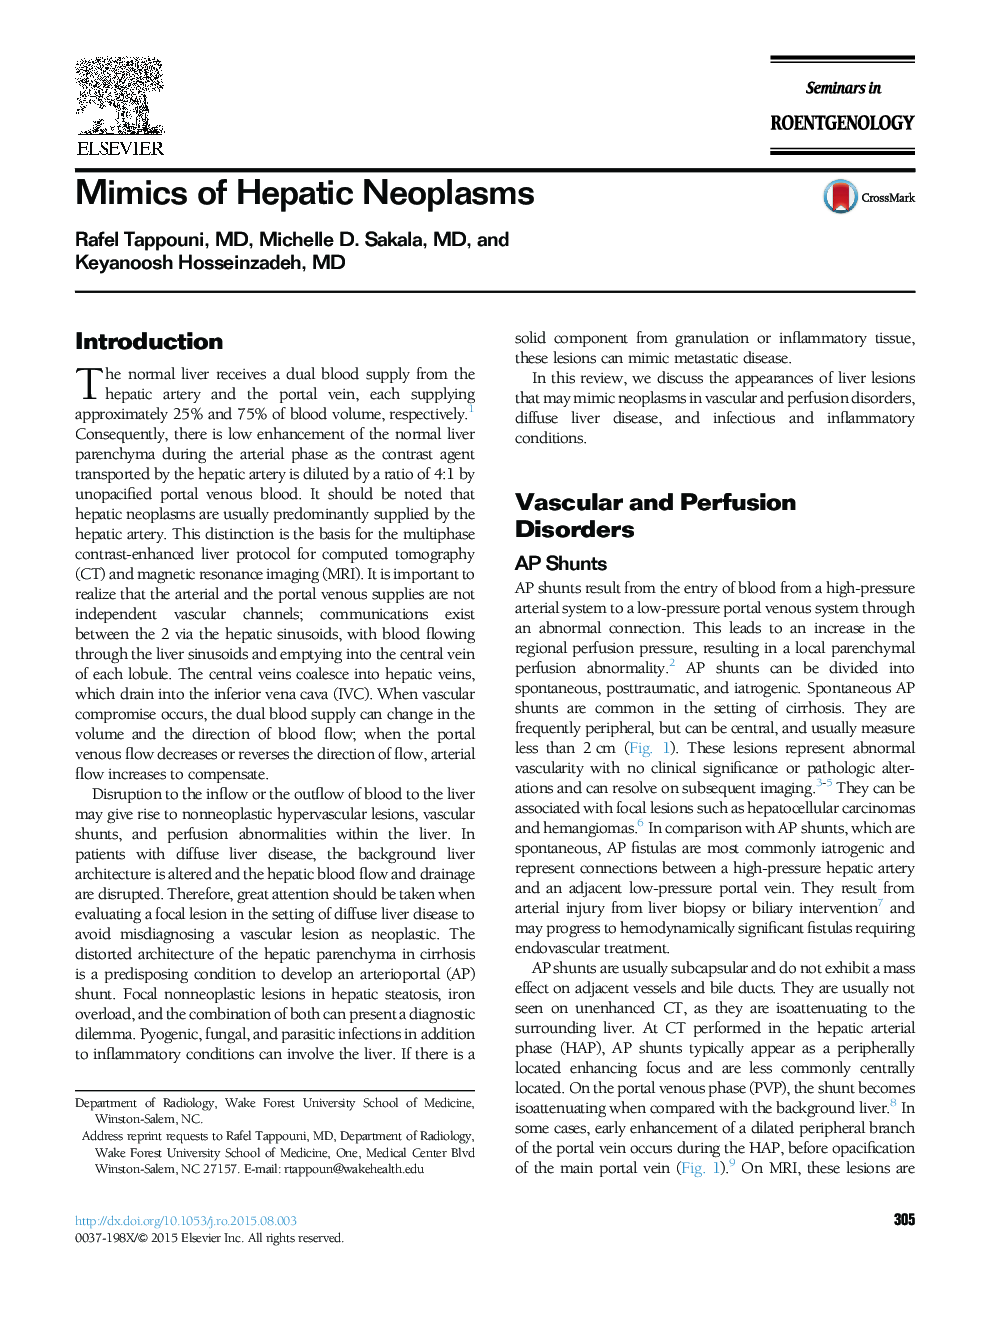 Mimics of Hepatic Neoplasms